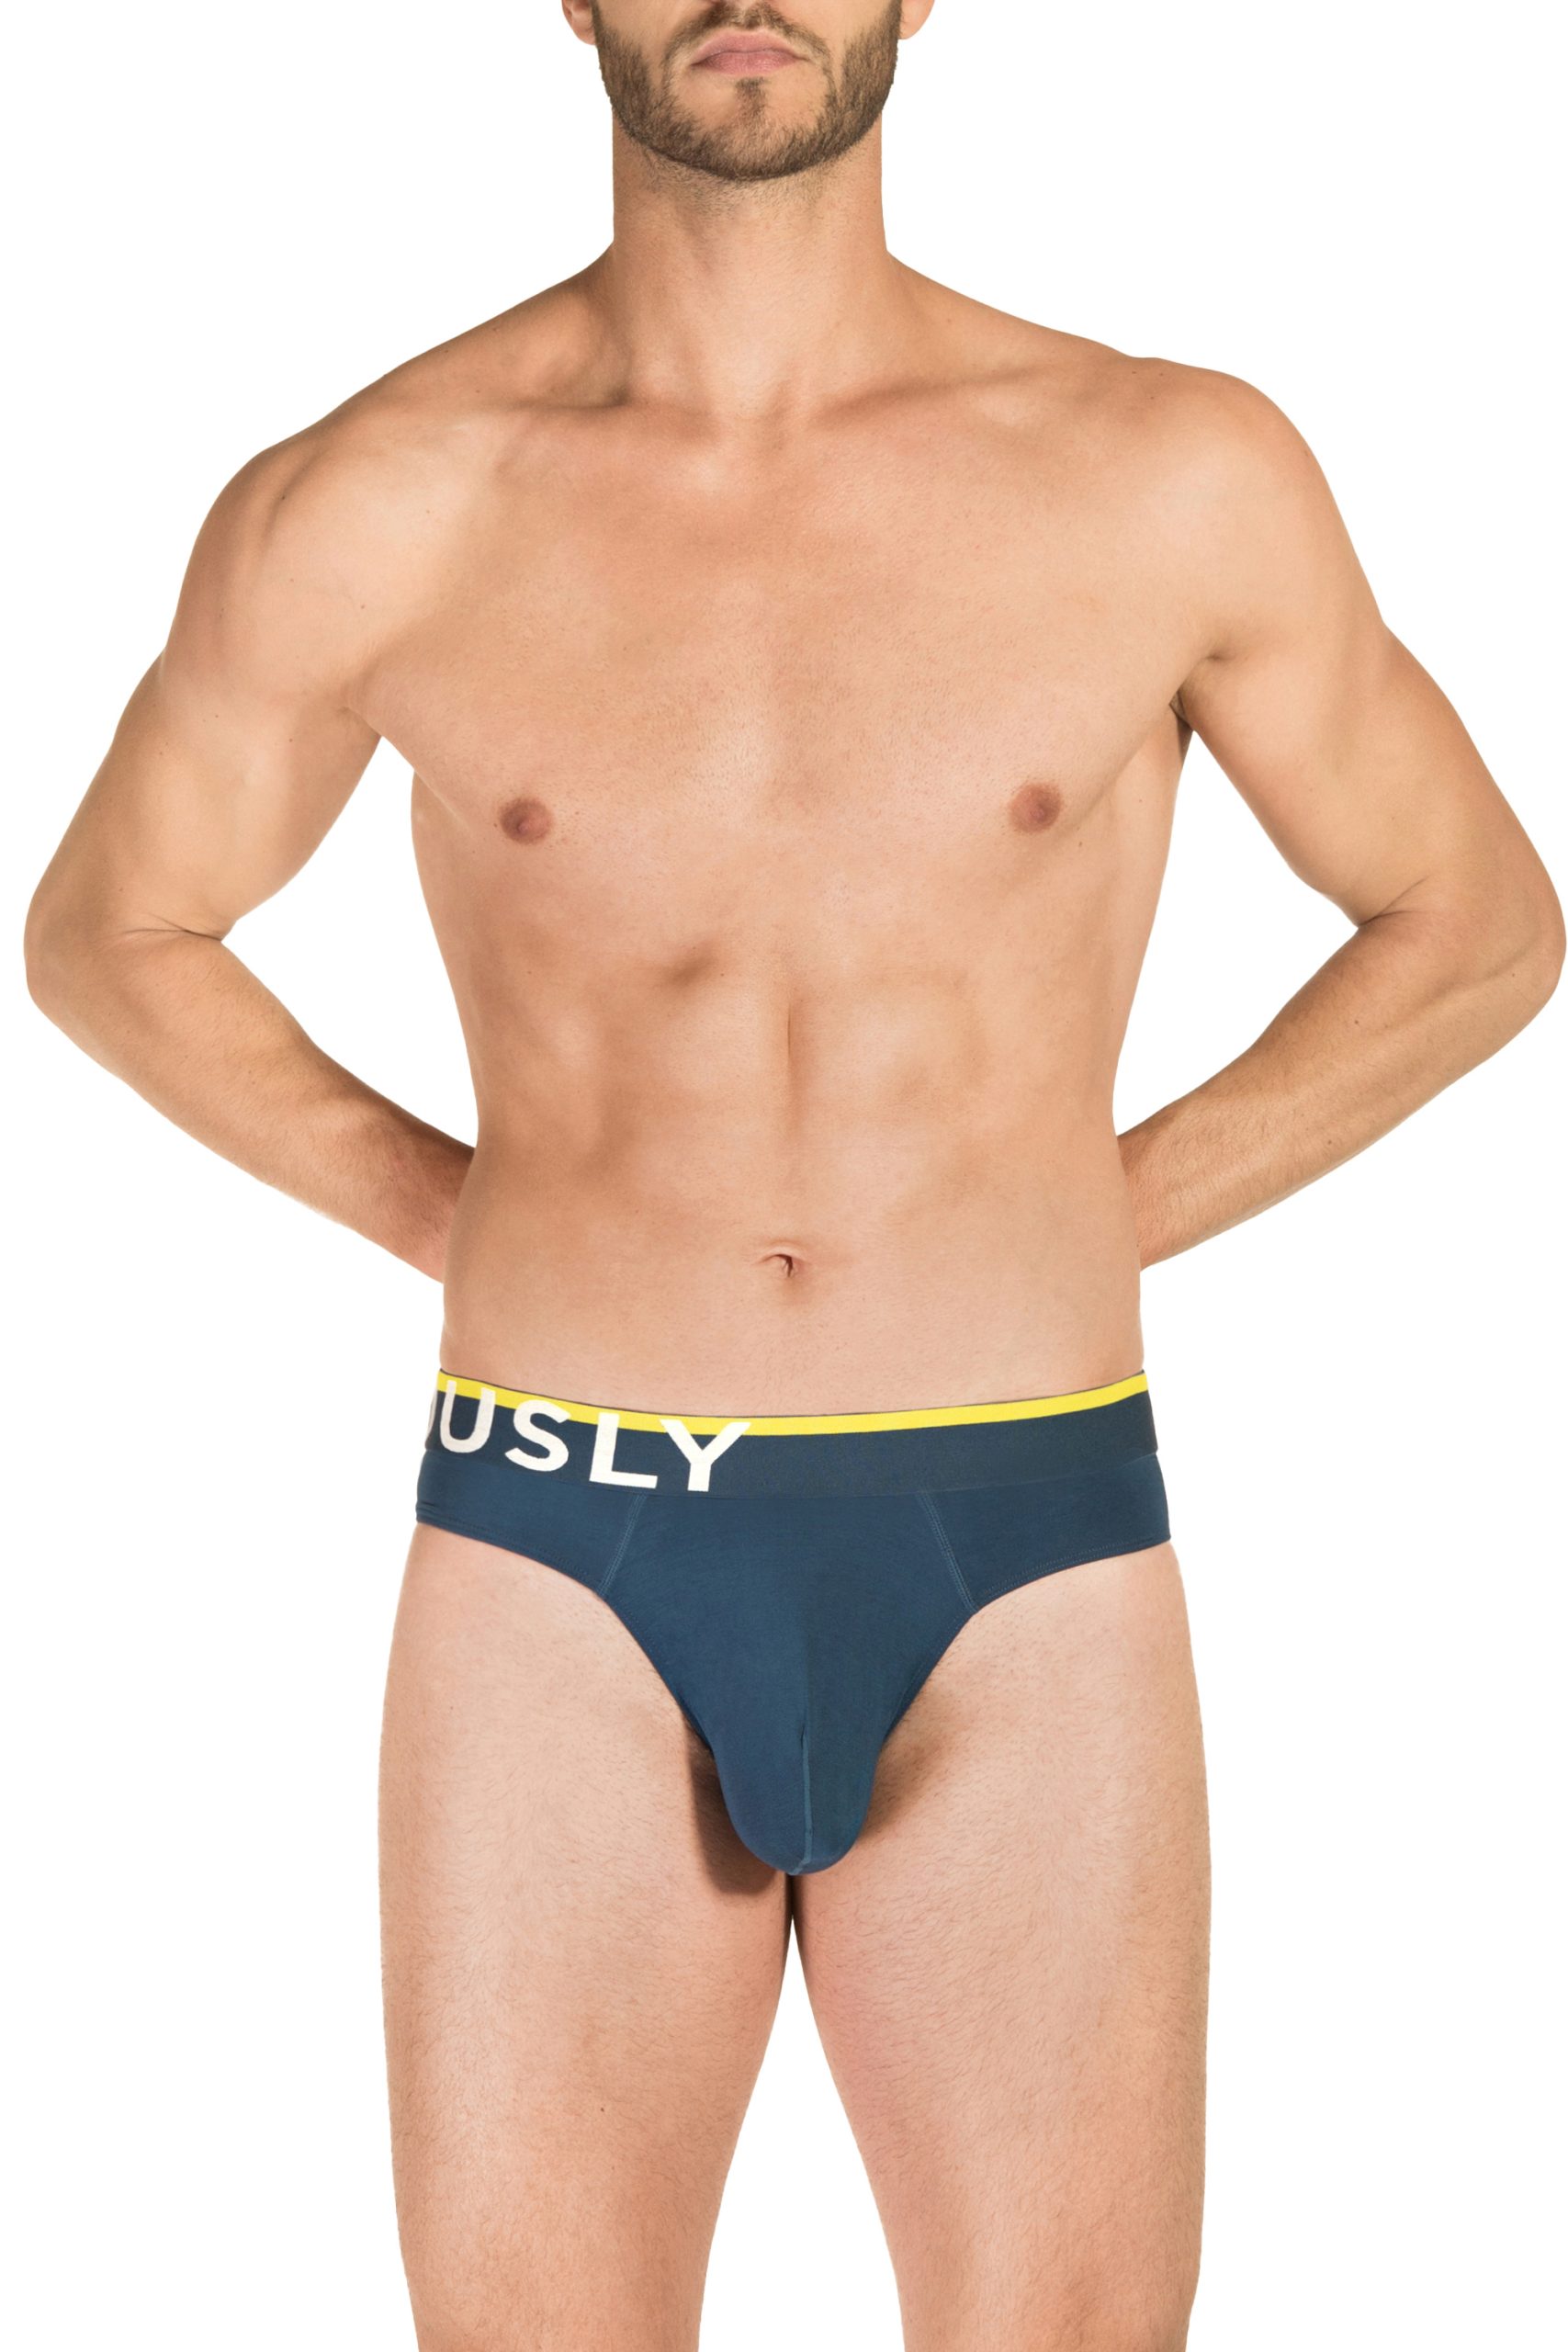 Underwear Suggestion: Obviously Apparel - EveryMan Briefs - Nautical